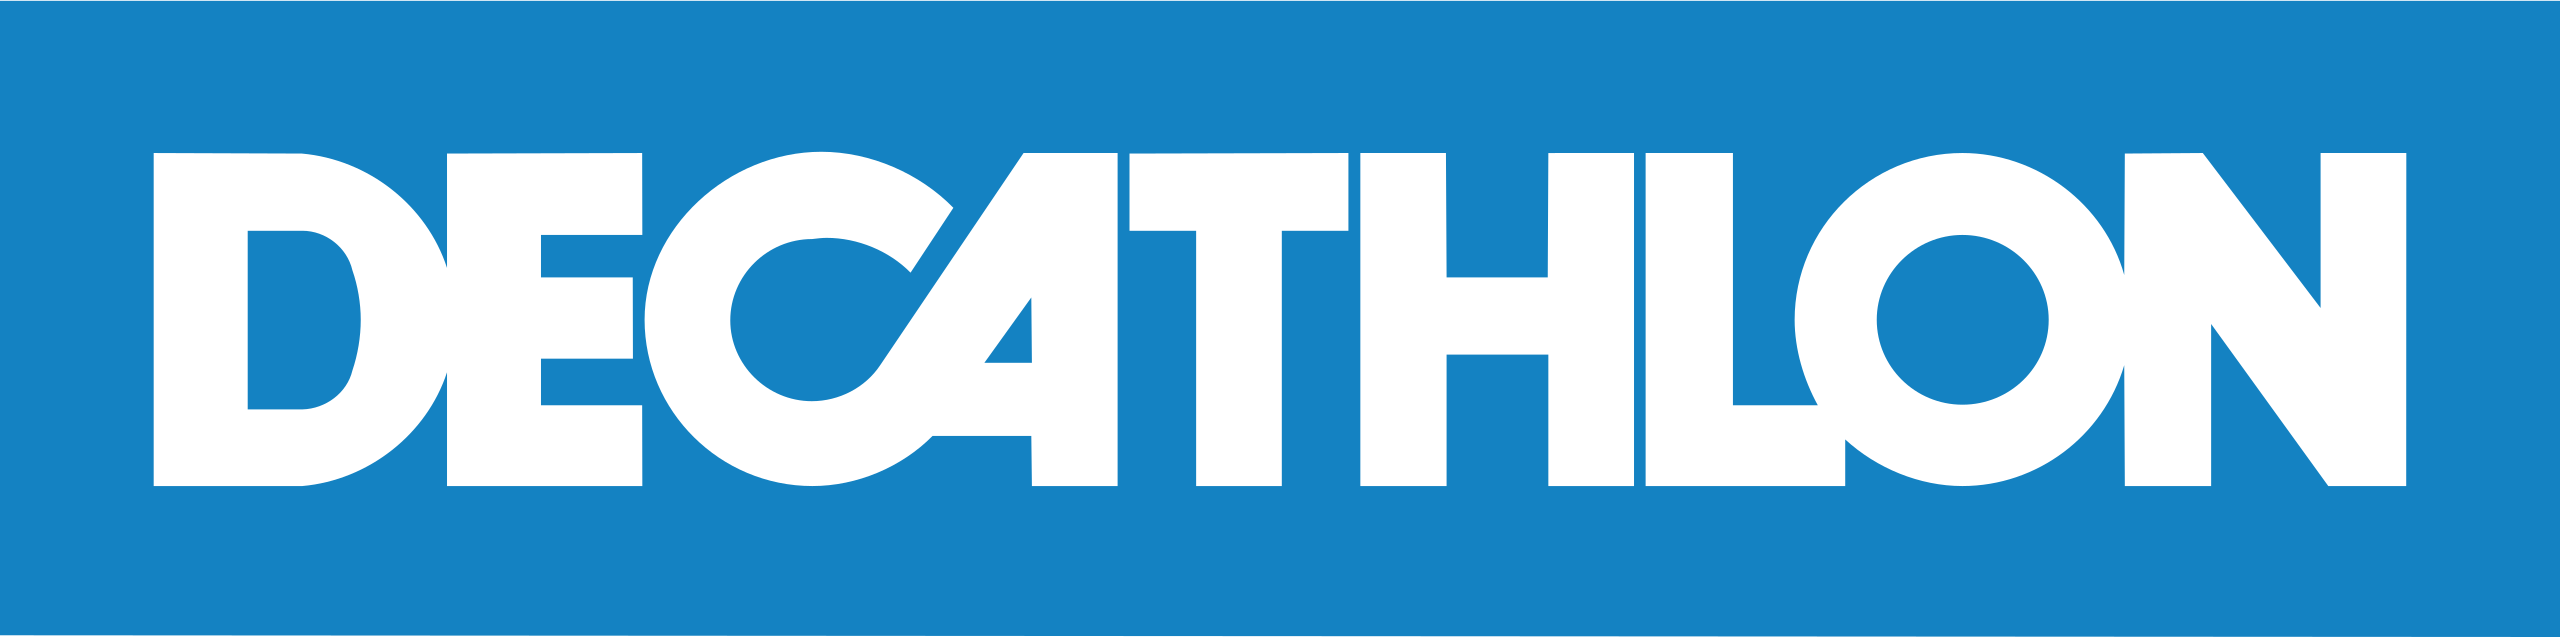 Decathlon-Logo-teambulding